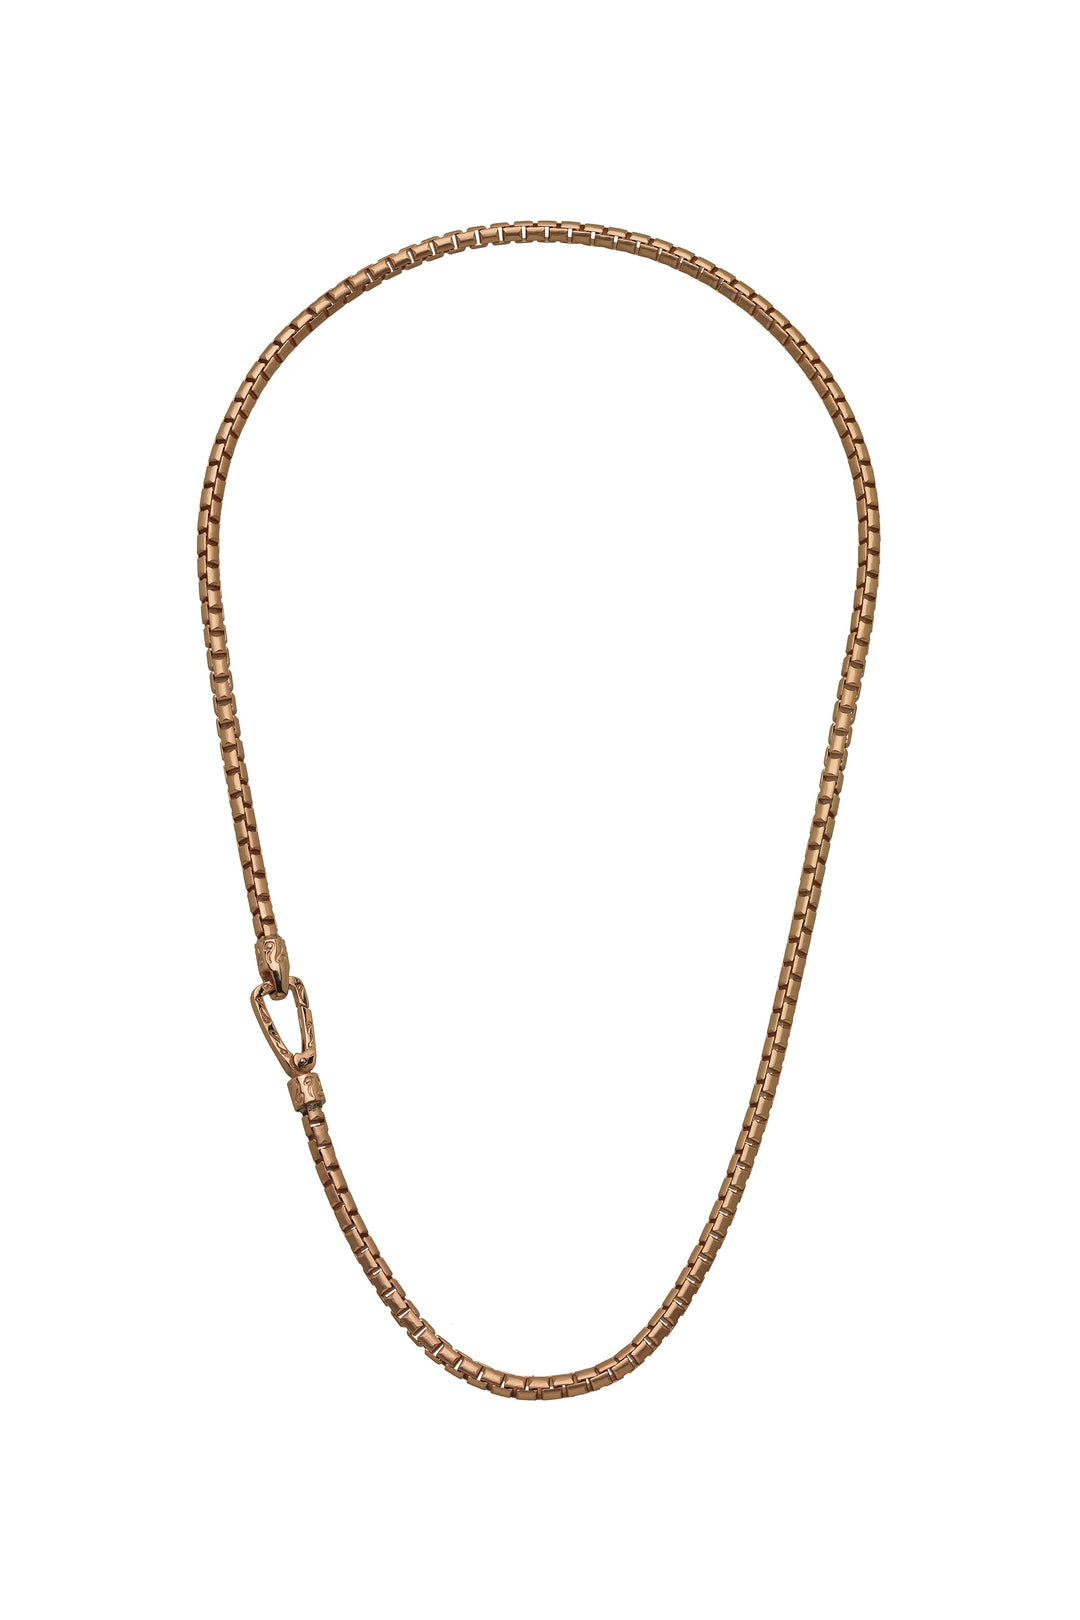 ULYSSES Carved Tubular 18K Rose Gold Vermeil Necklace Matte Chain and Polished Clasp